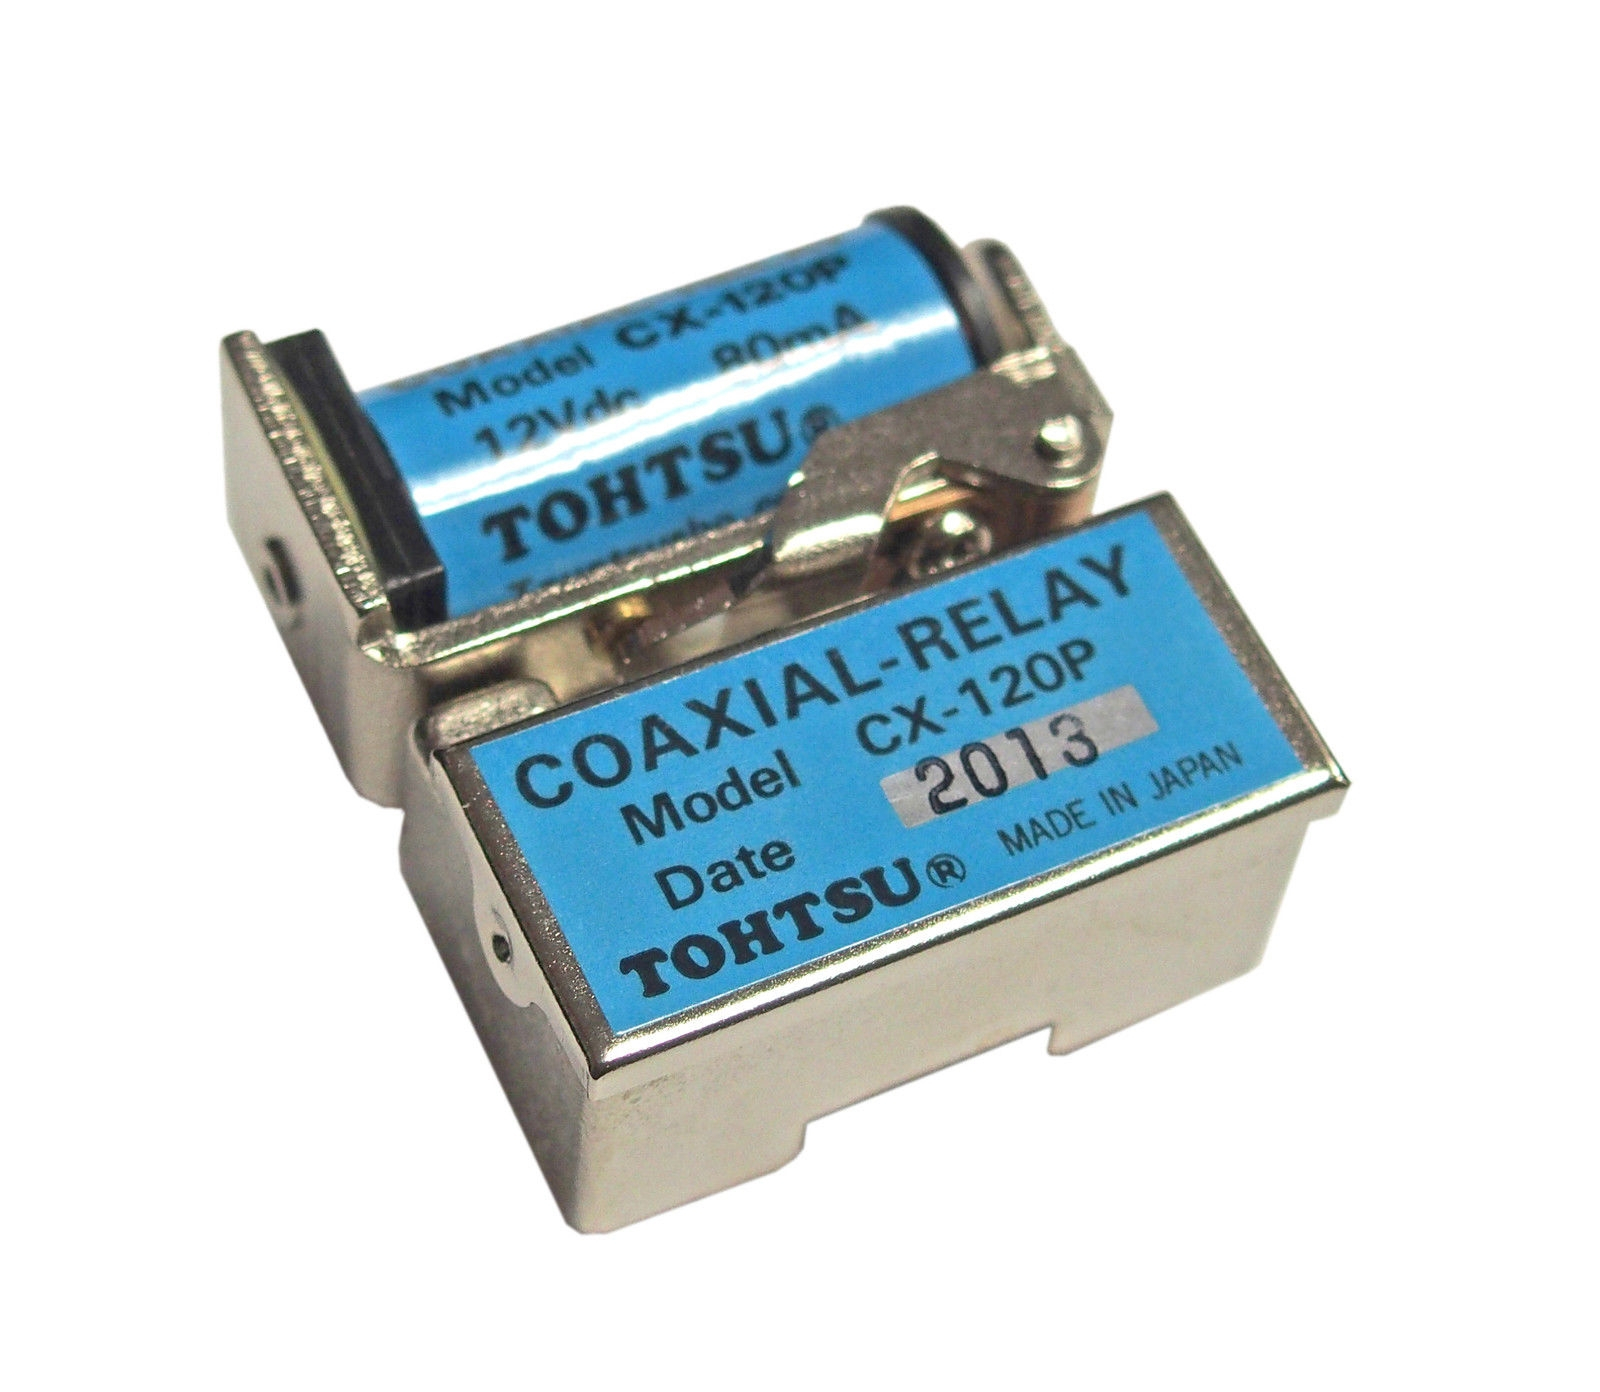 Tohtsu CX-120P coaxial relay